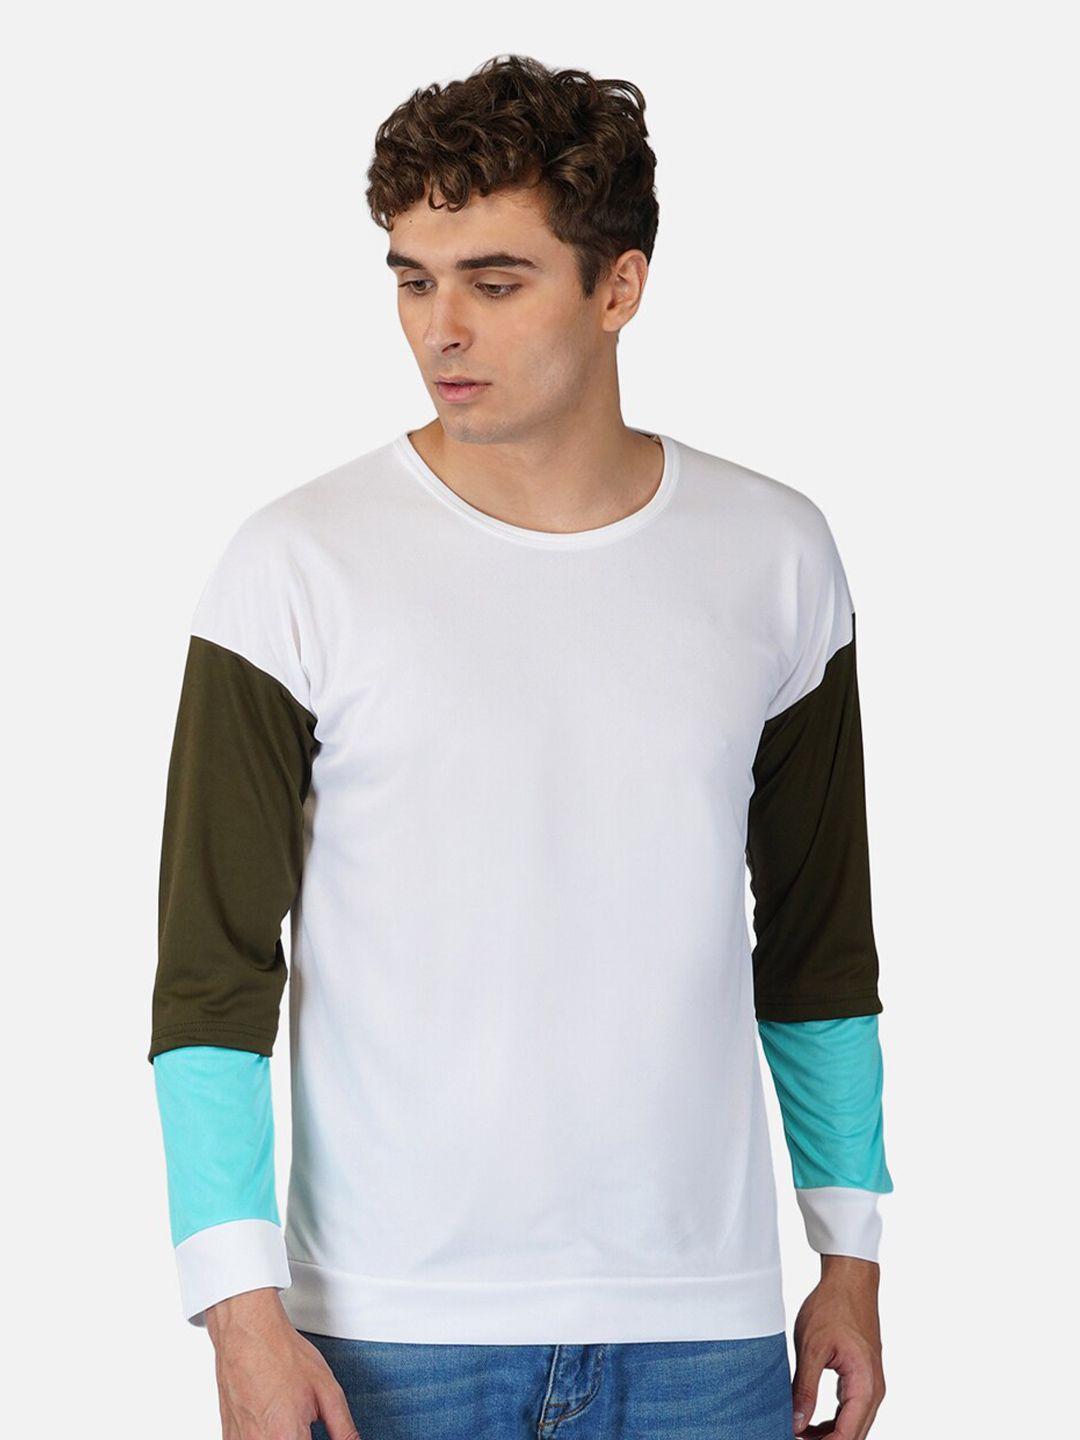 clafoutis-men-white-&-blue-colourblocked-extended-sleeves-t-shirt